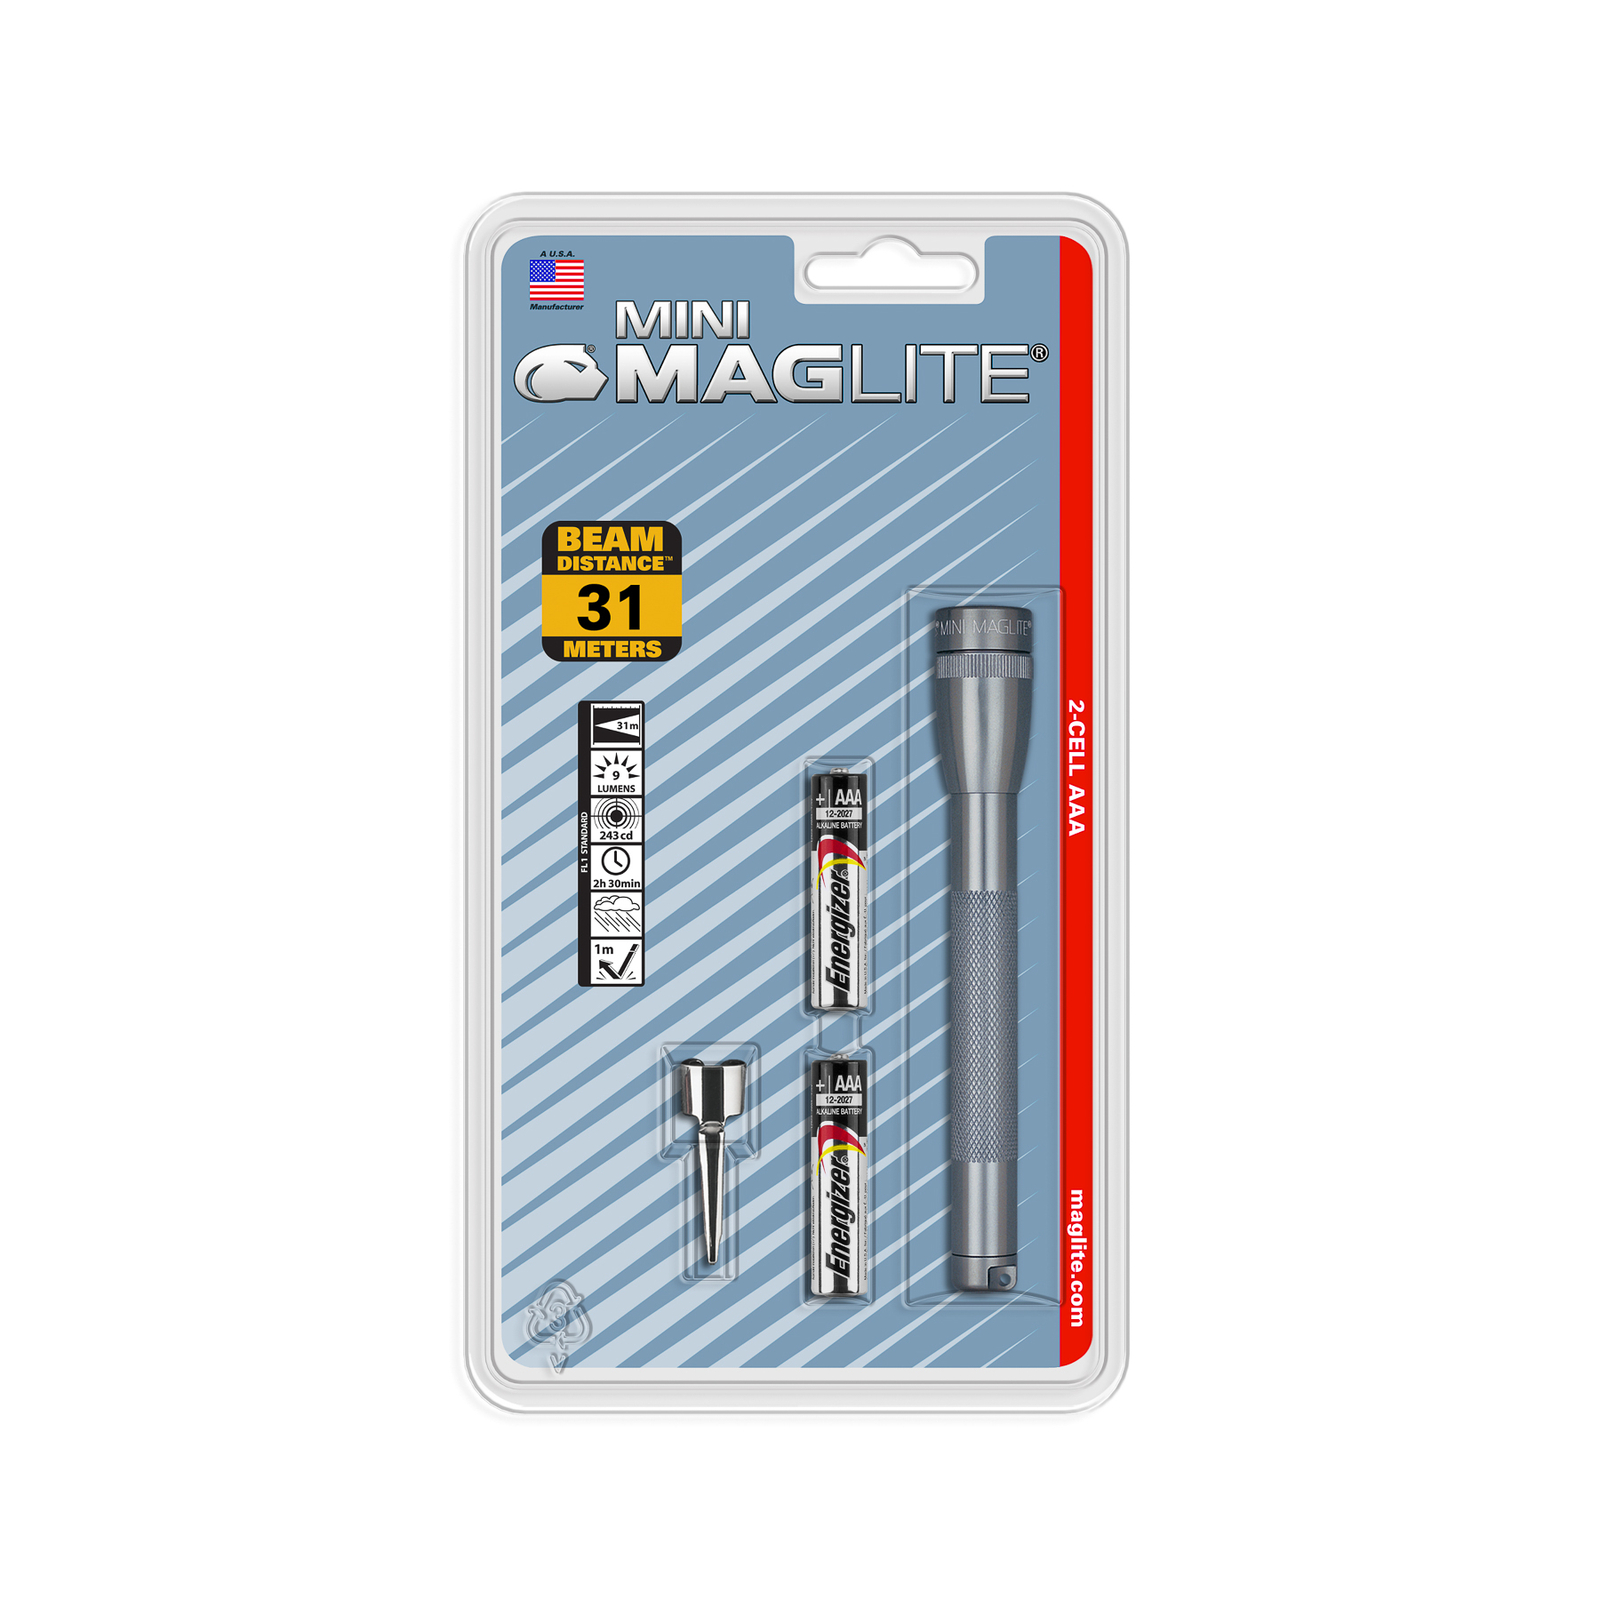 Maglite Xenon torch Mini, 2-Cell AAA, grey